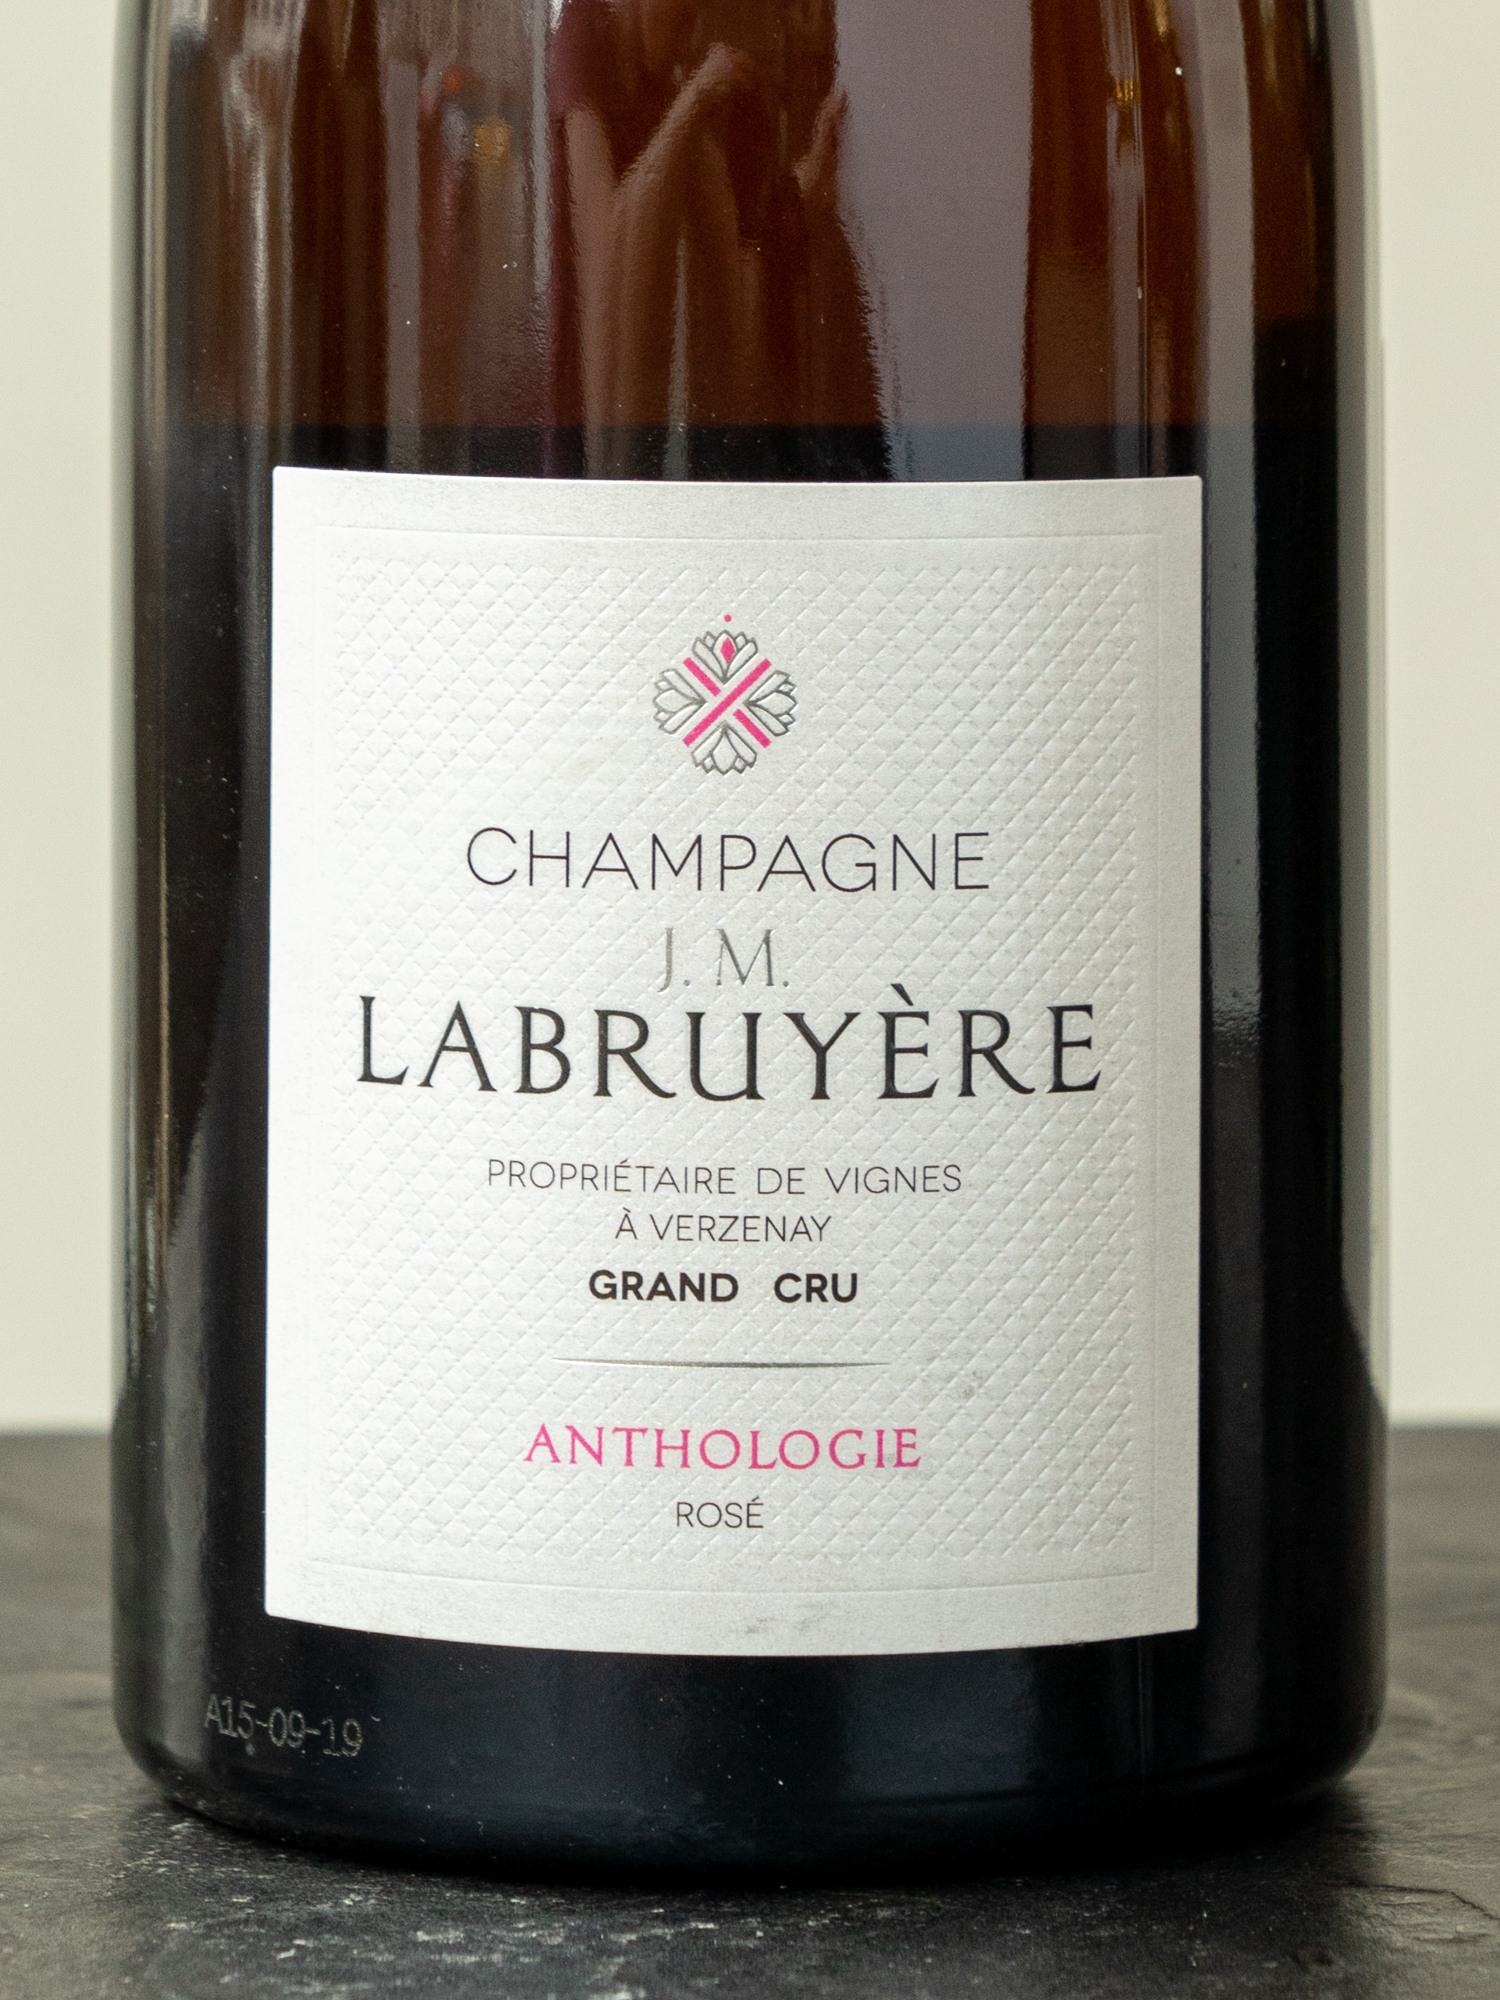 Этикетка J.M. Labruyere Champagne Grand Cru Anthologie Rose